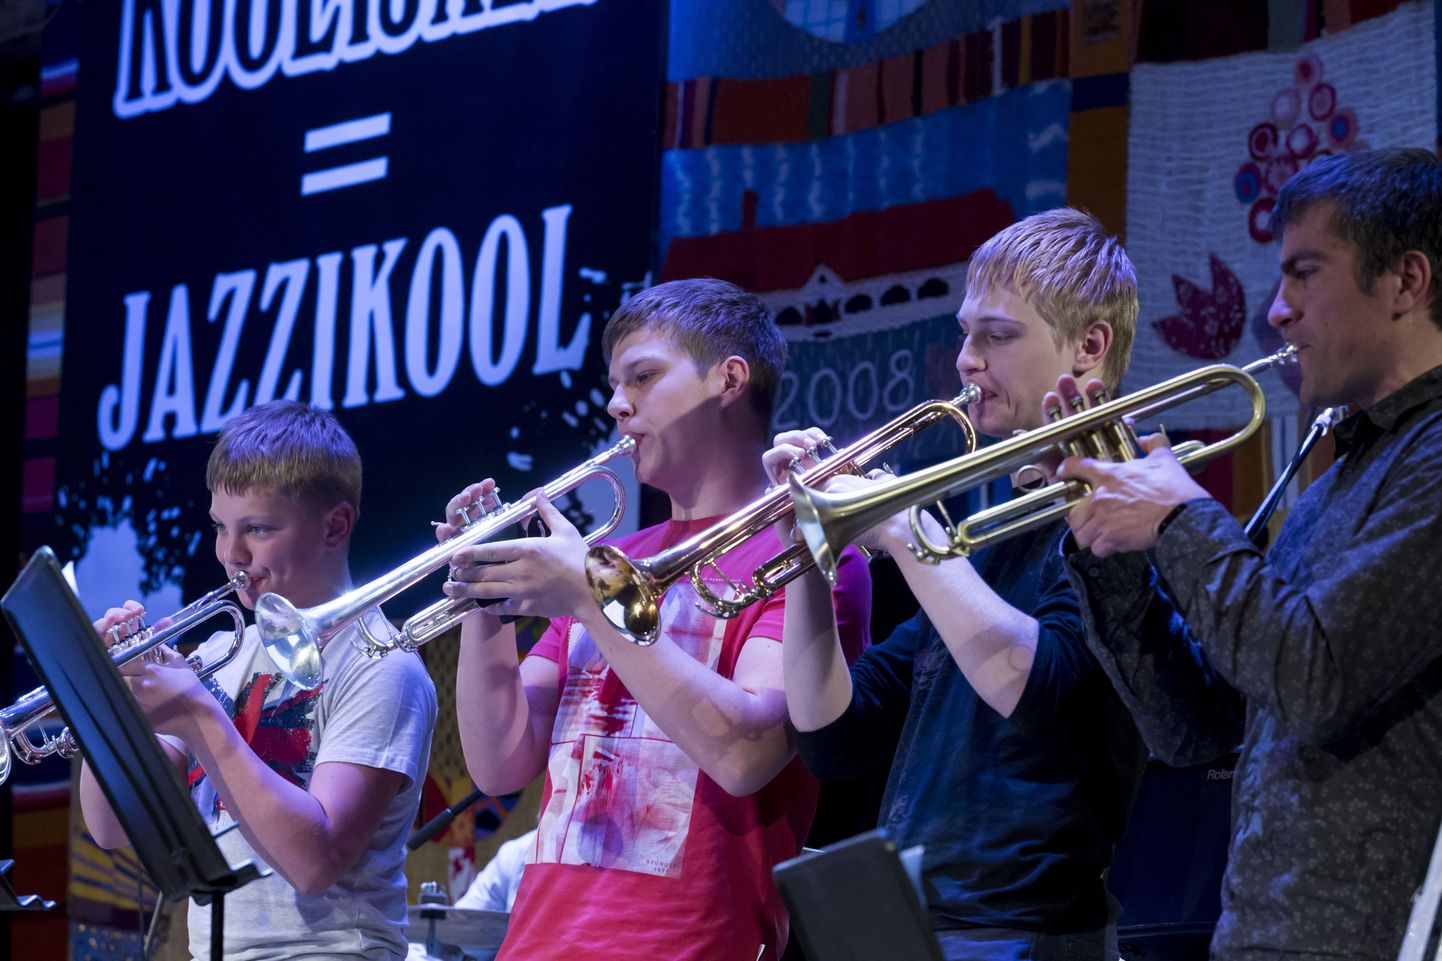 Festivali "Koolijazz=Jazzikool" kontsert.